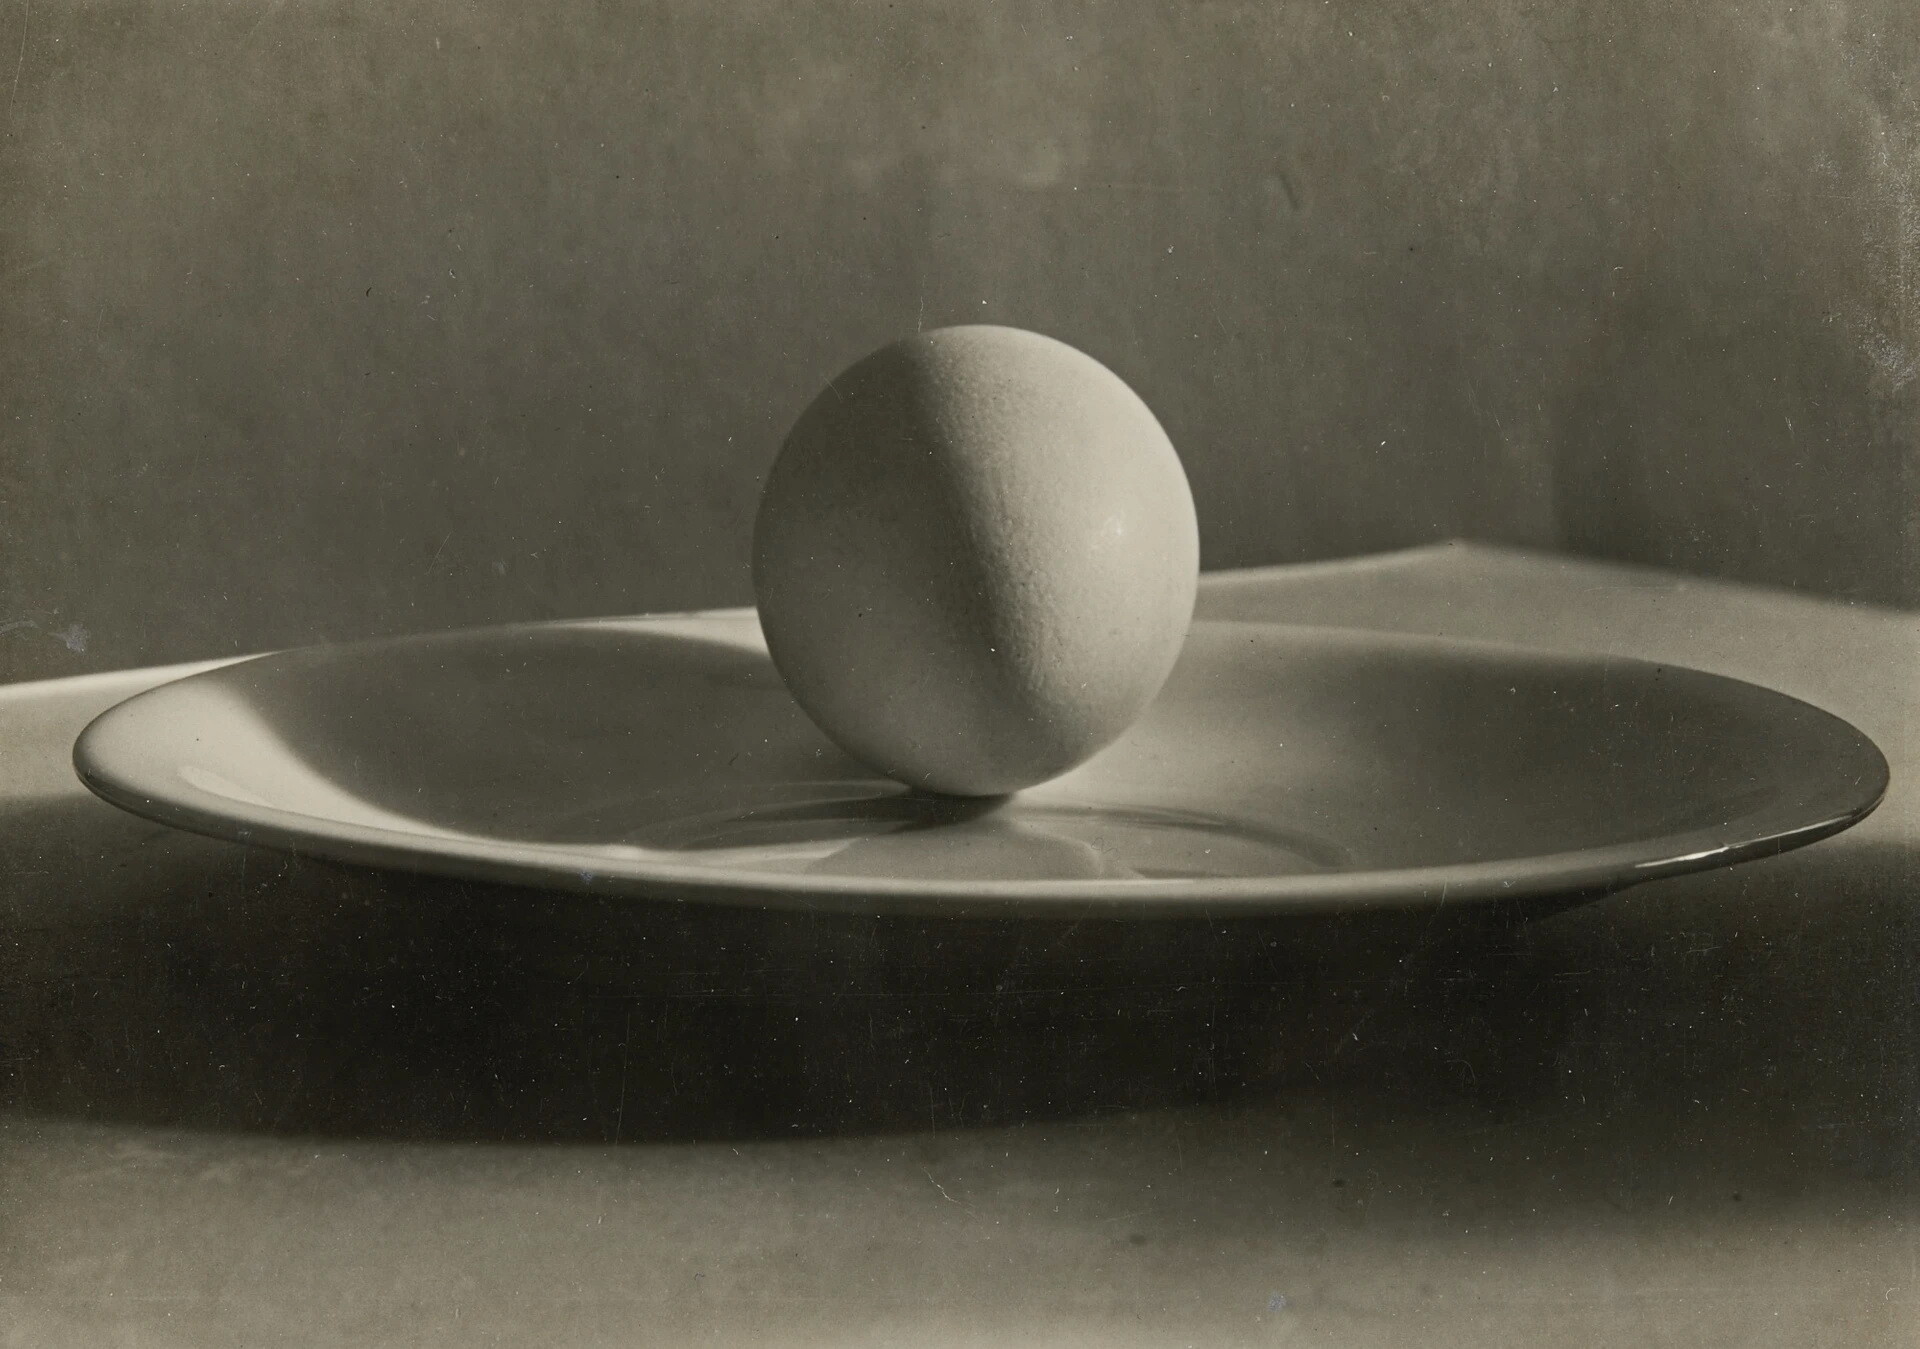 Яйцо на тарелке, 1955 год. Фотограф Йозеф Судек